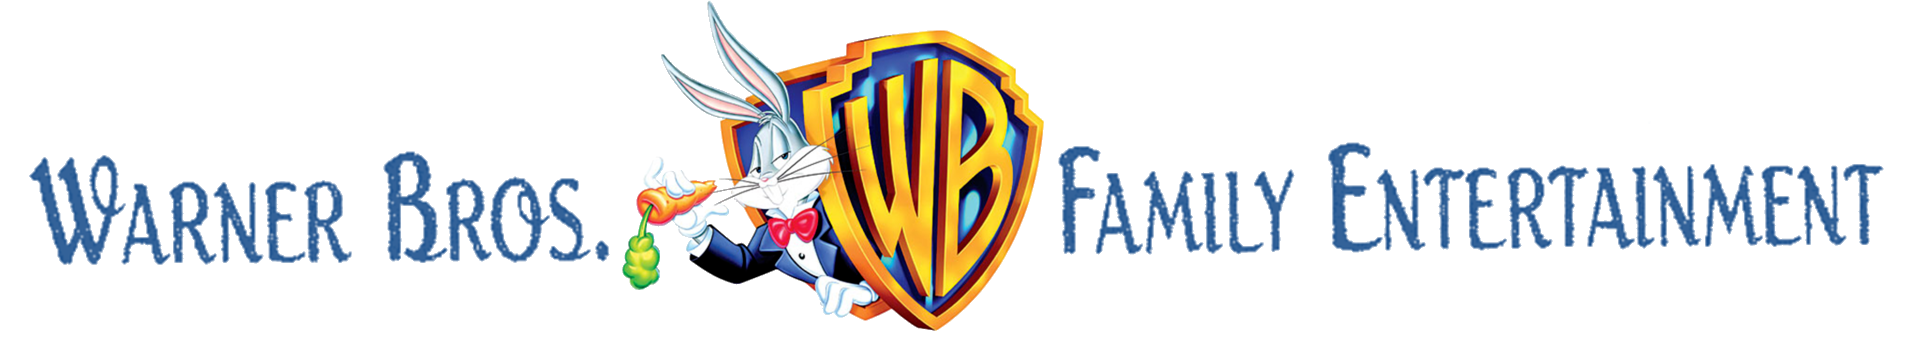 Warner Bros. Family Entertainment Logo